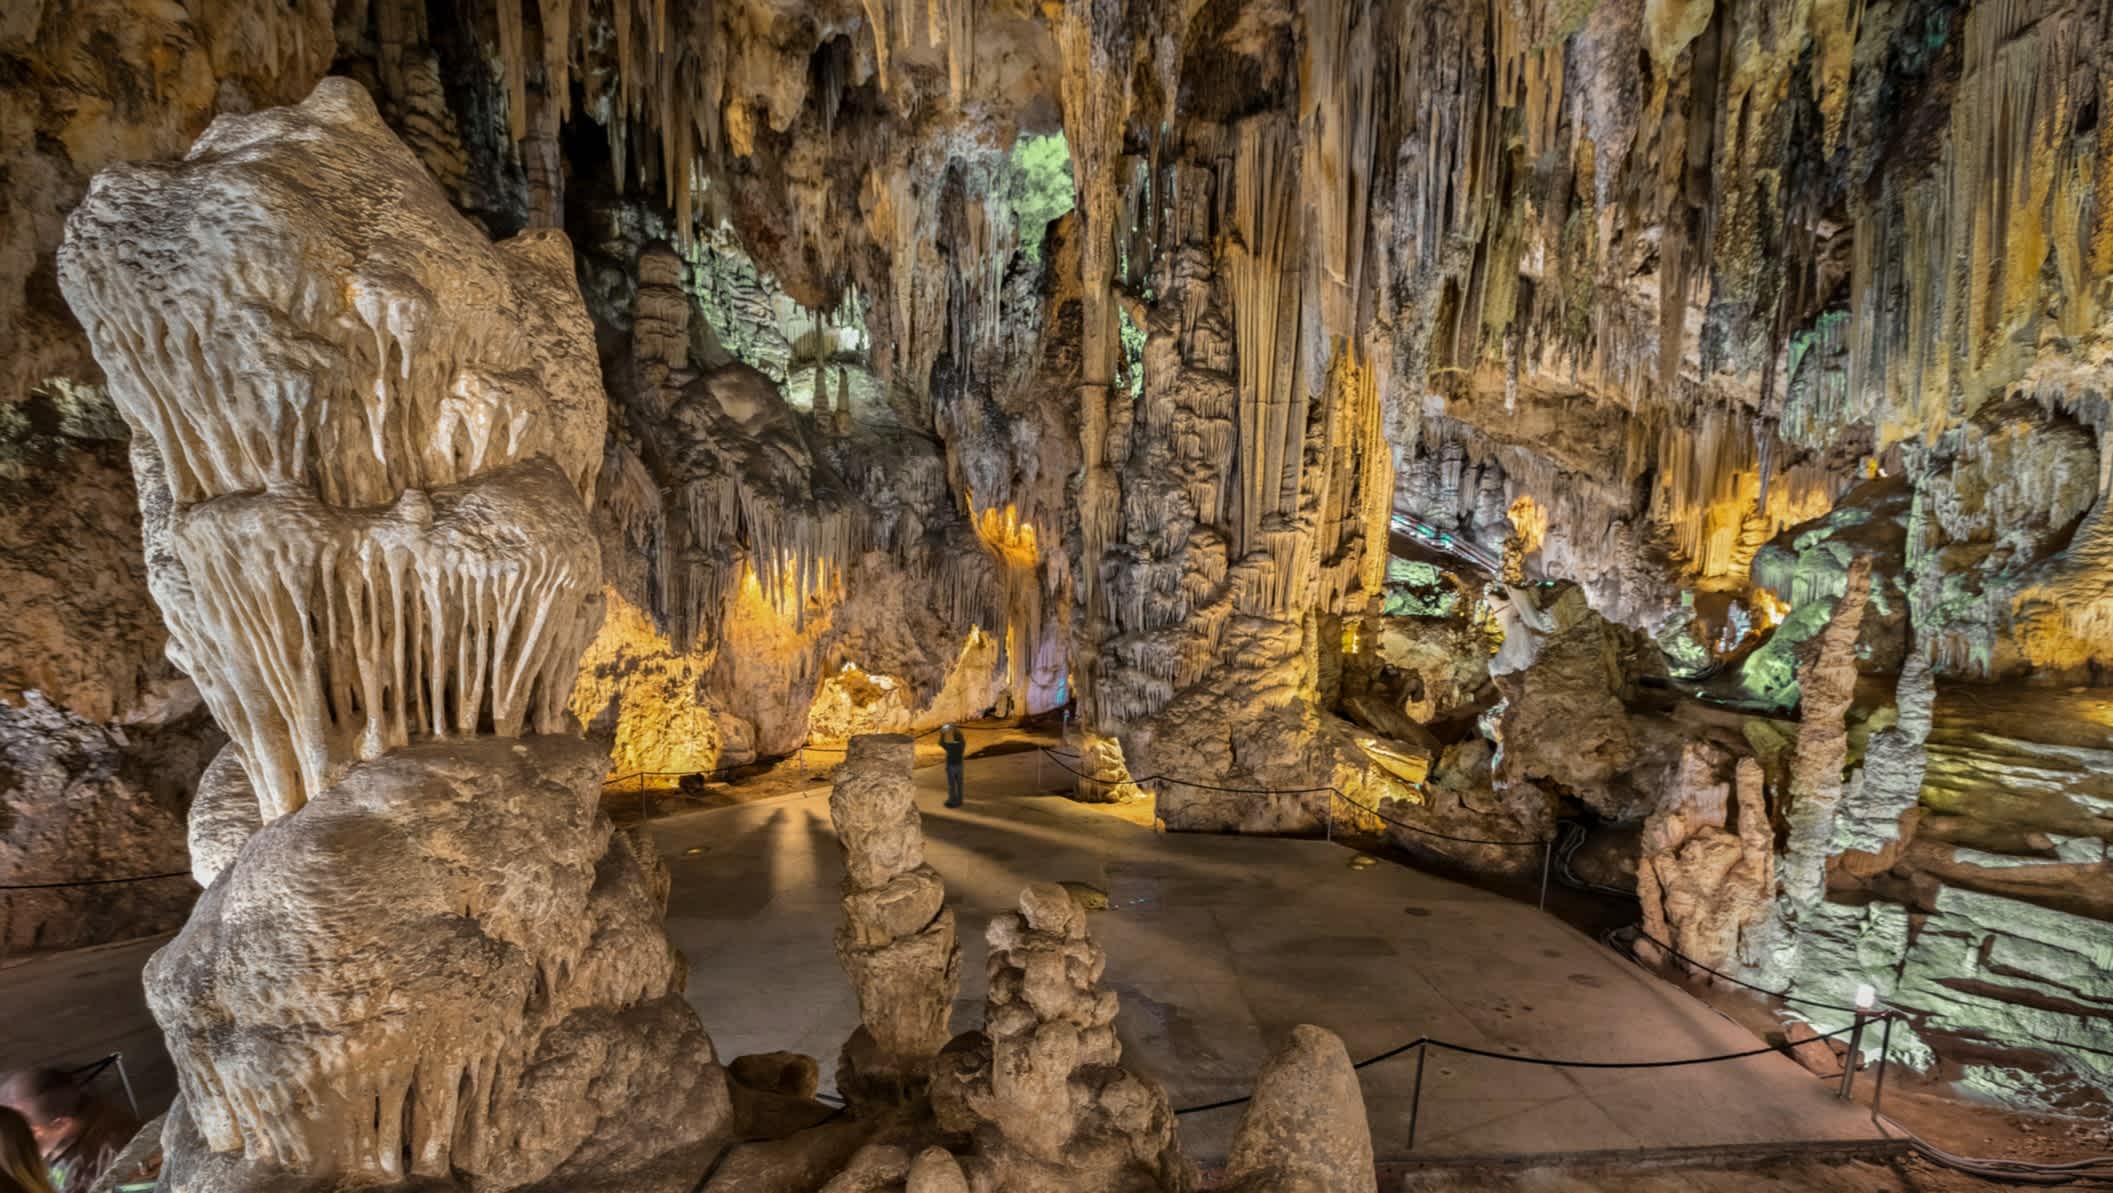 Geologische Formationen in der berühmten Nerja-Höhle, Andalusien, Spanien

